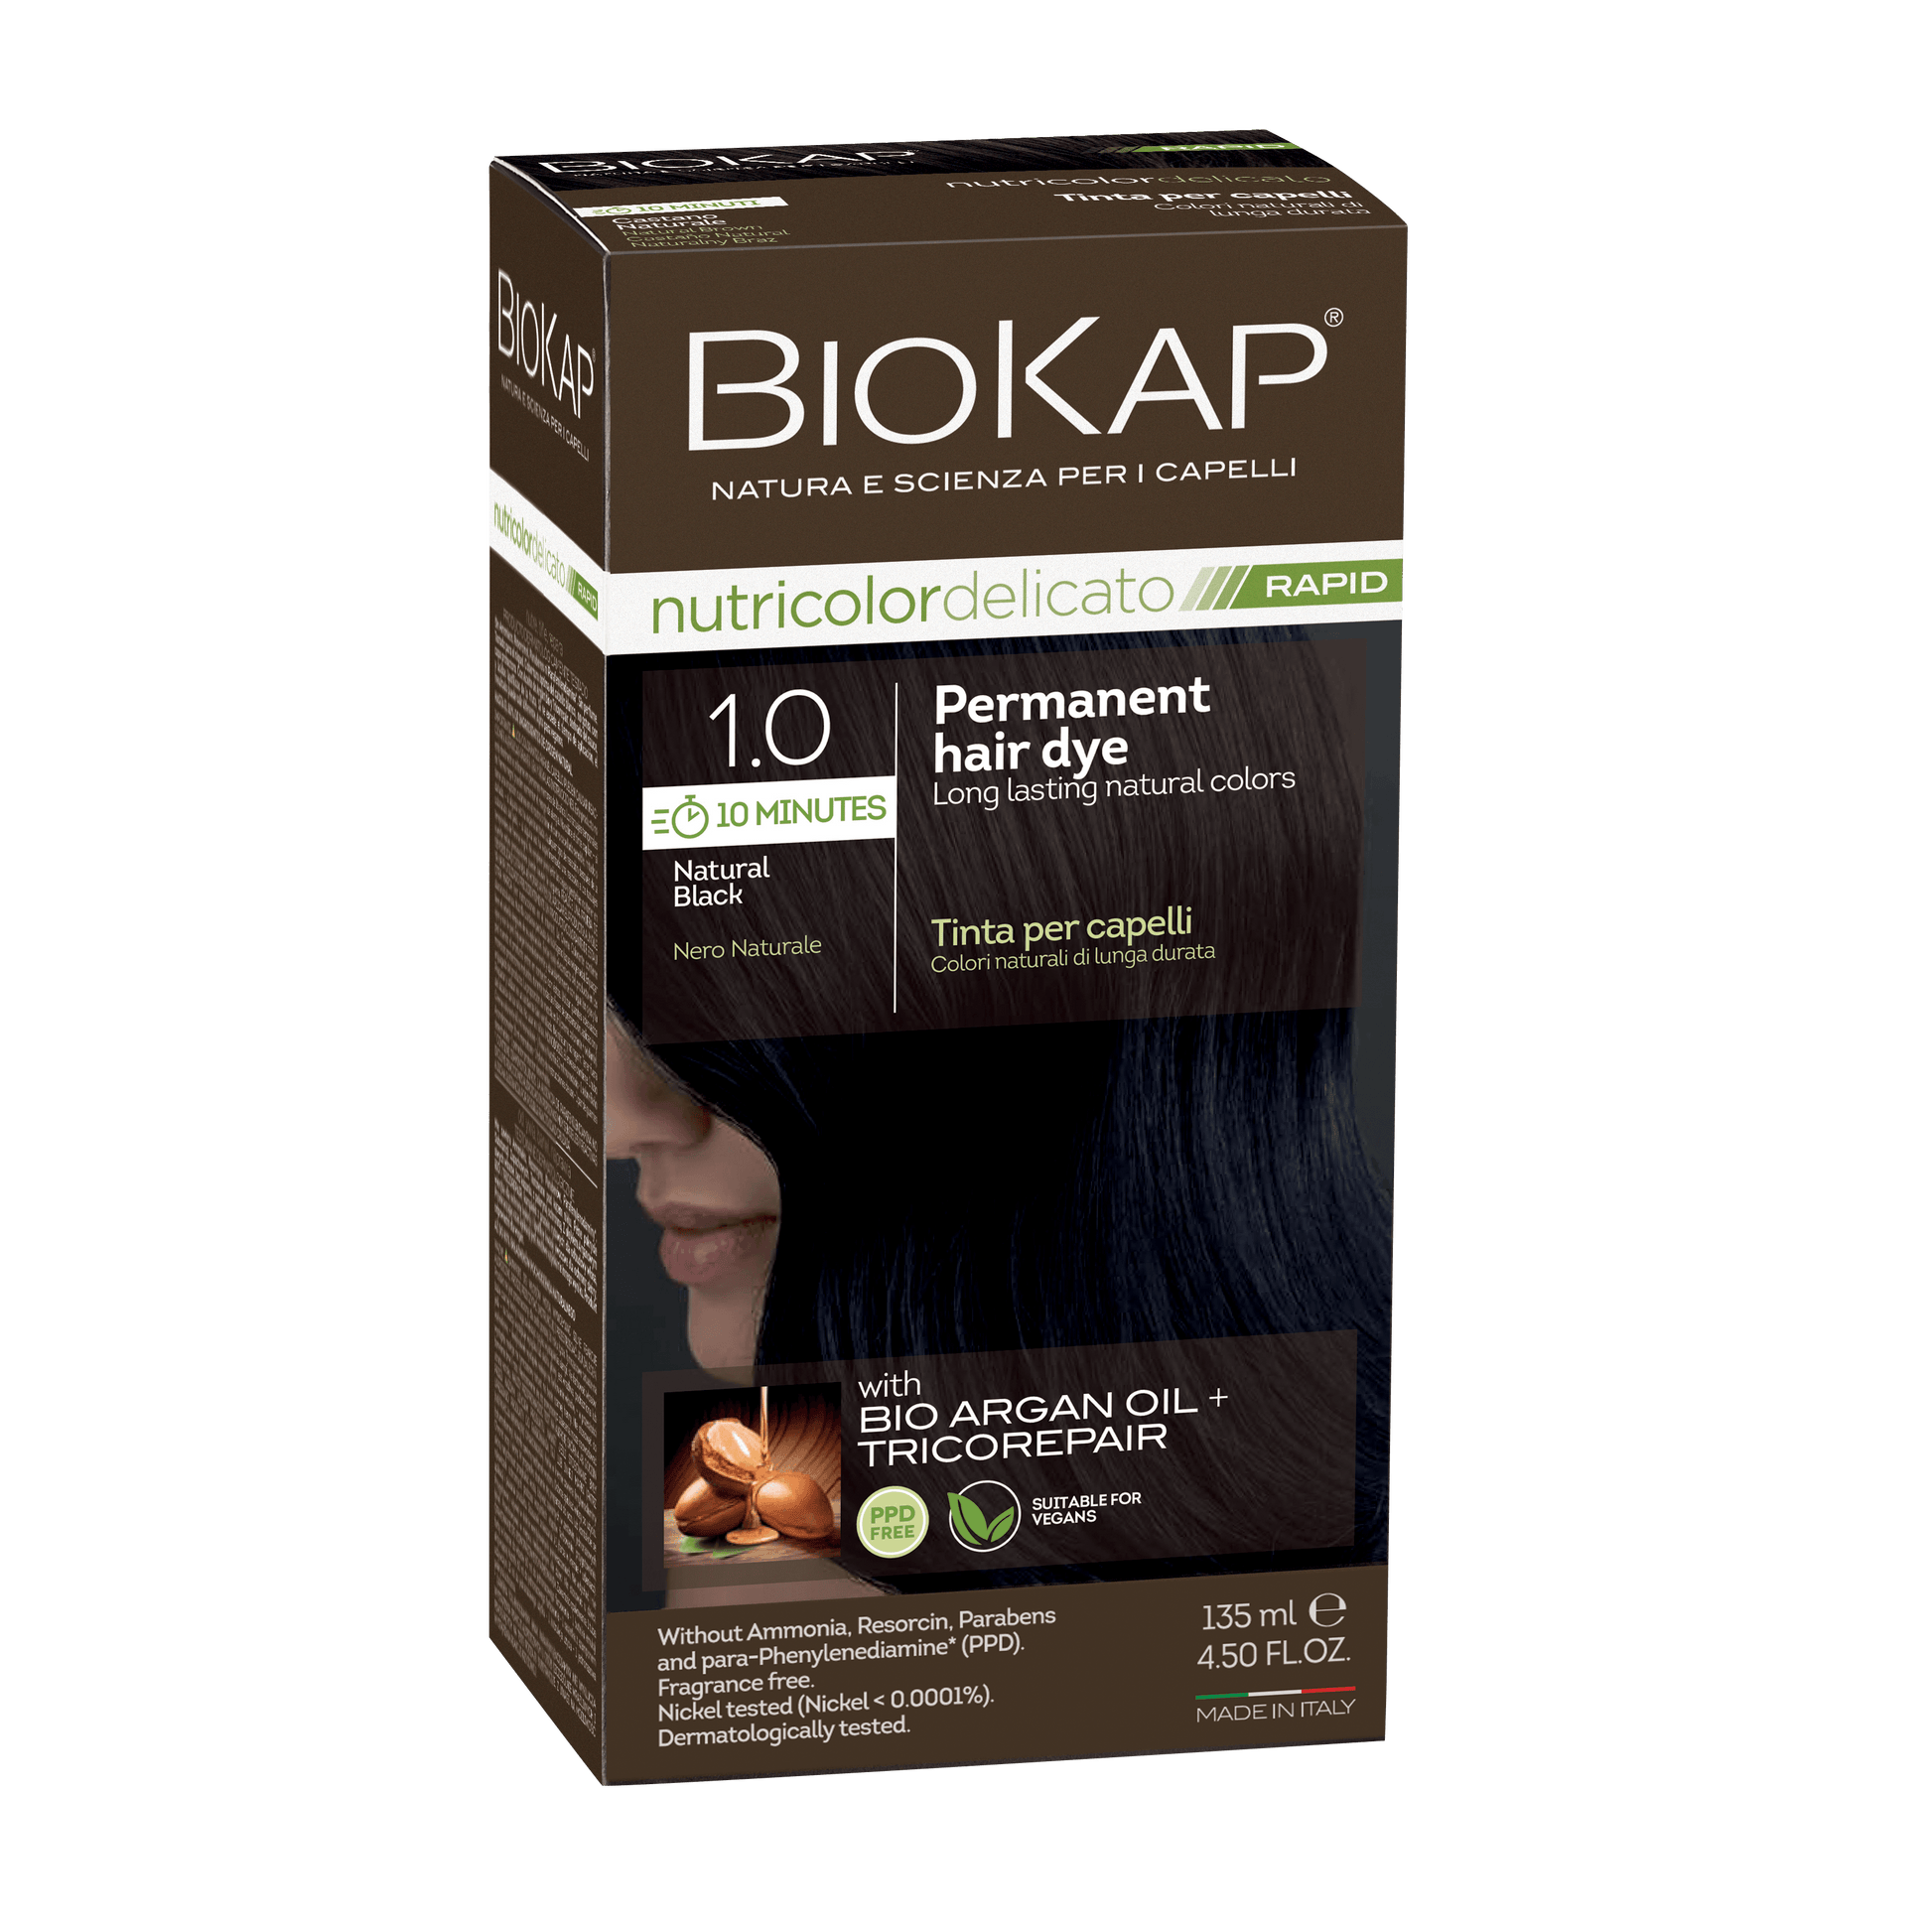 BIOKAP NUTRICOLOR DELICATO RAPID 1.0 NATURAL BLACK PERMANENT HAIR DYE